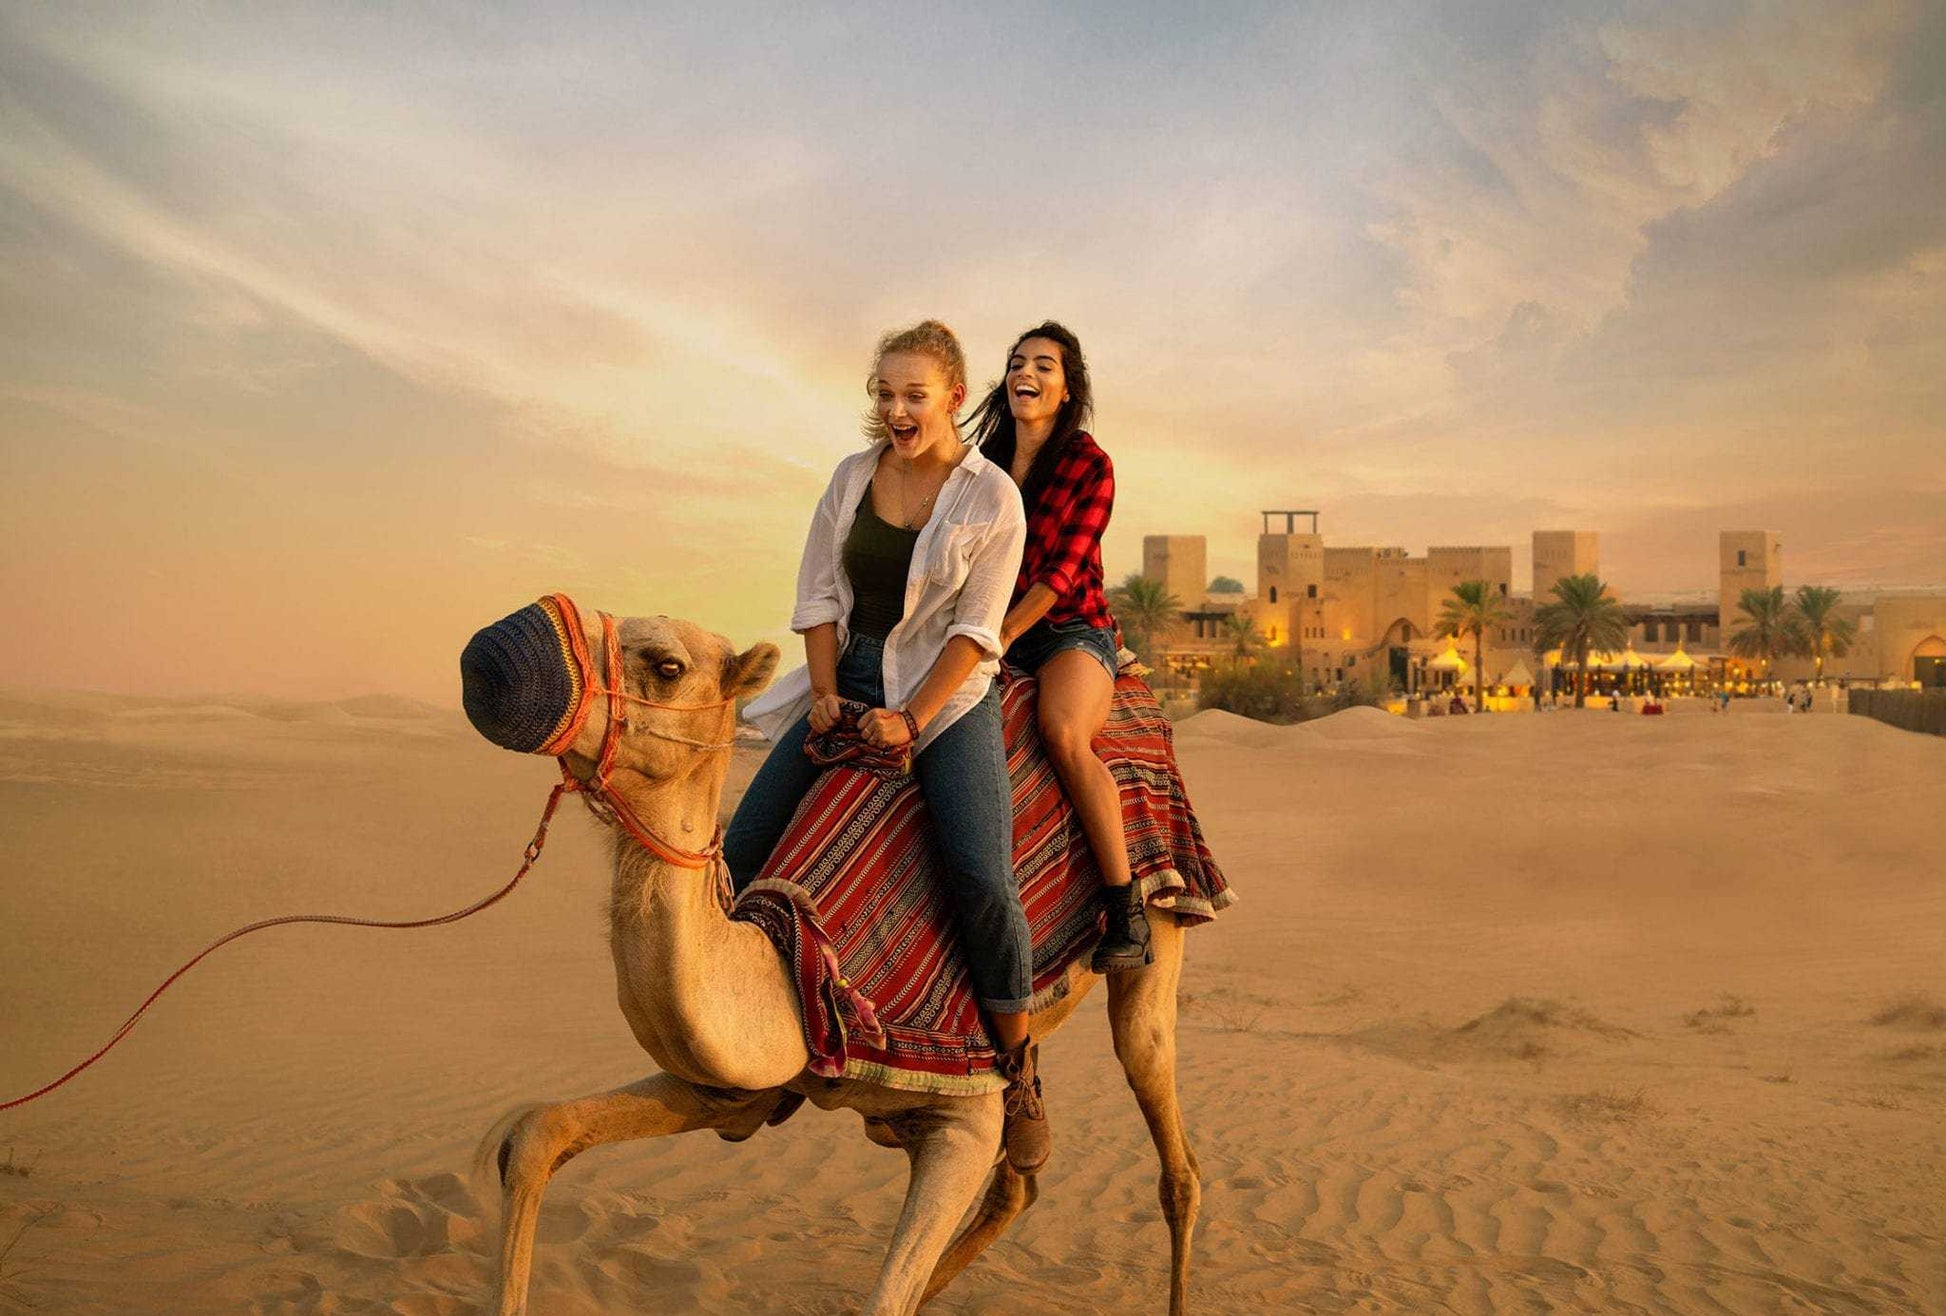 Dubai Premium Desert Safari , Dune Bashing, Sandboarding, Camel Riding, Entertainment Shows and Live Cooking Station - Tripventura